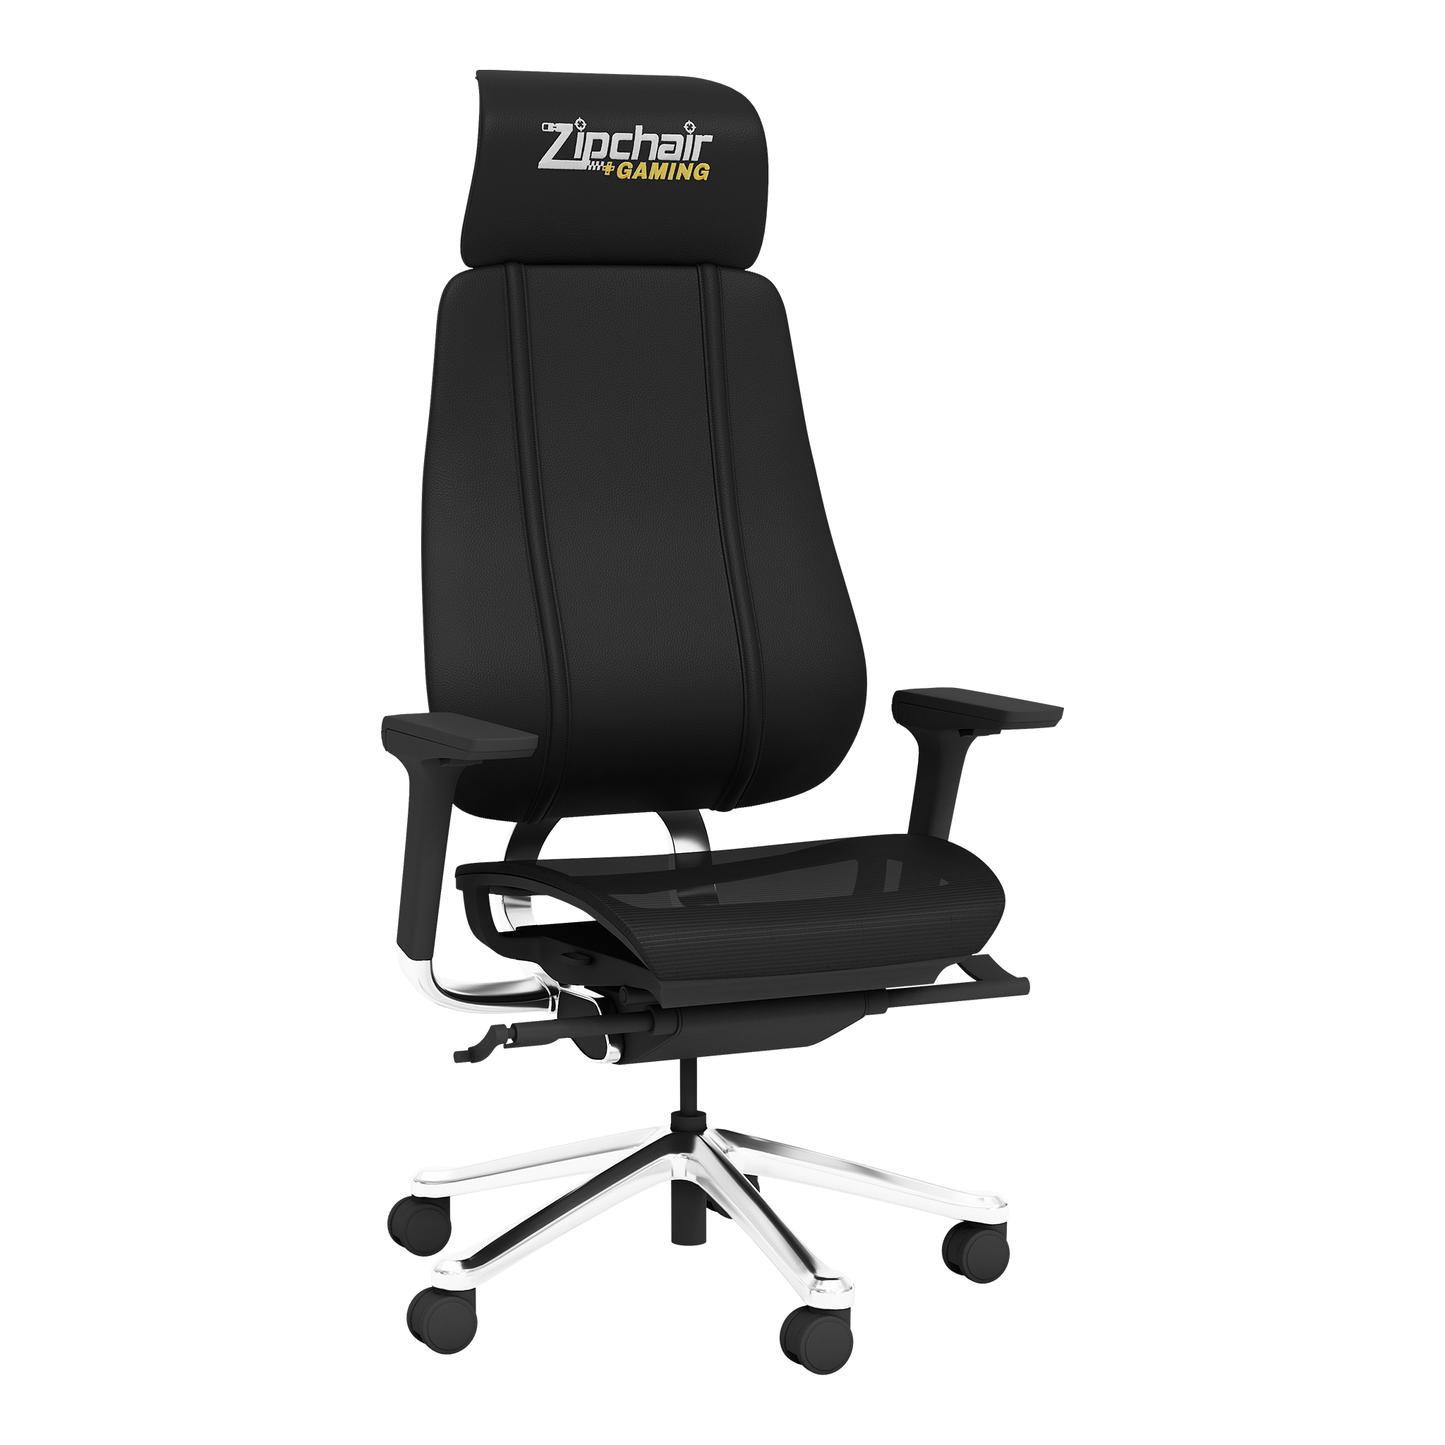 PhantomX Gaming Chair with Georgia Tech Yellow Jackets Alternate Buzz Logo